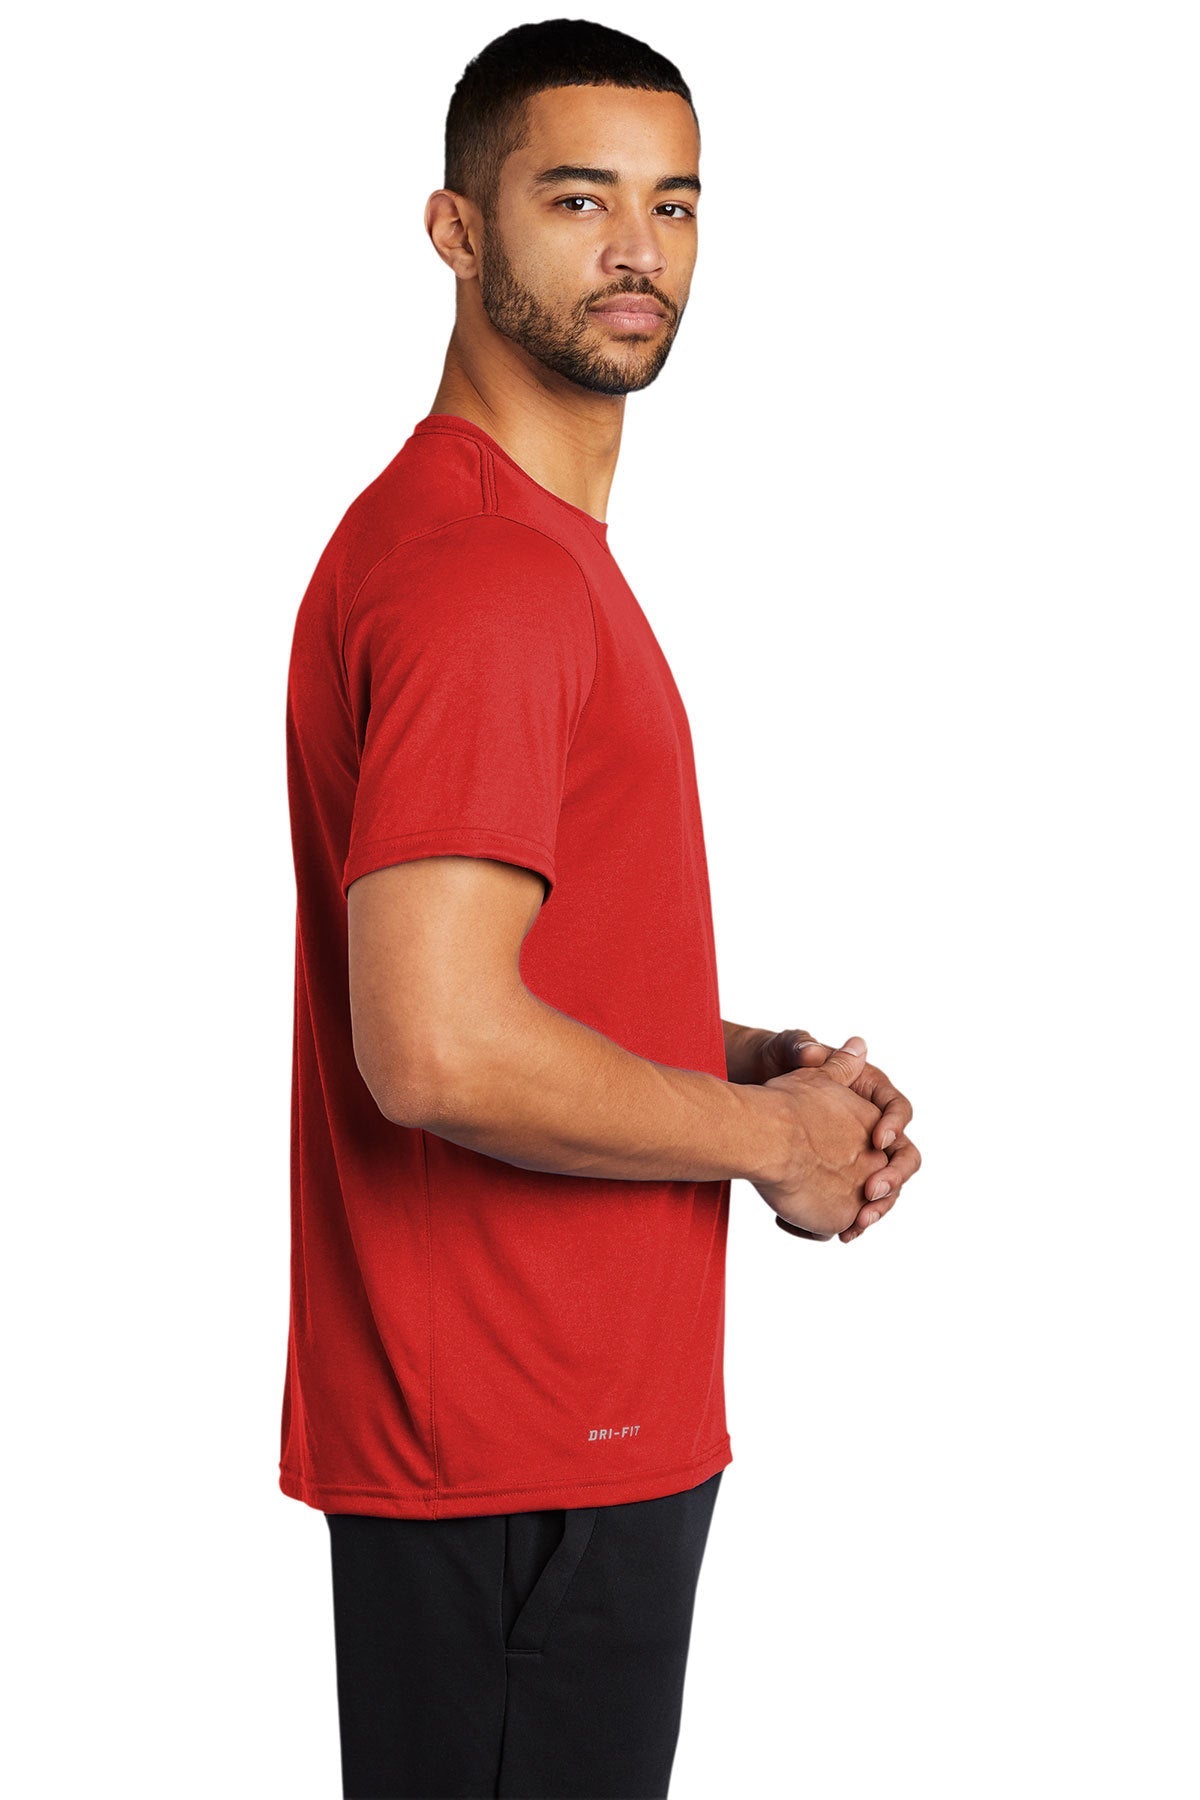 Nike Legend Customized T-Shirts, University Red